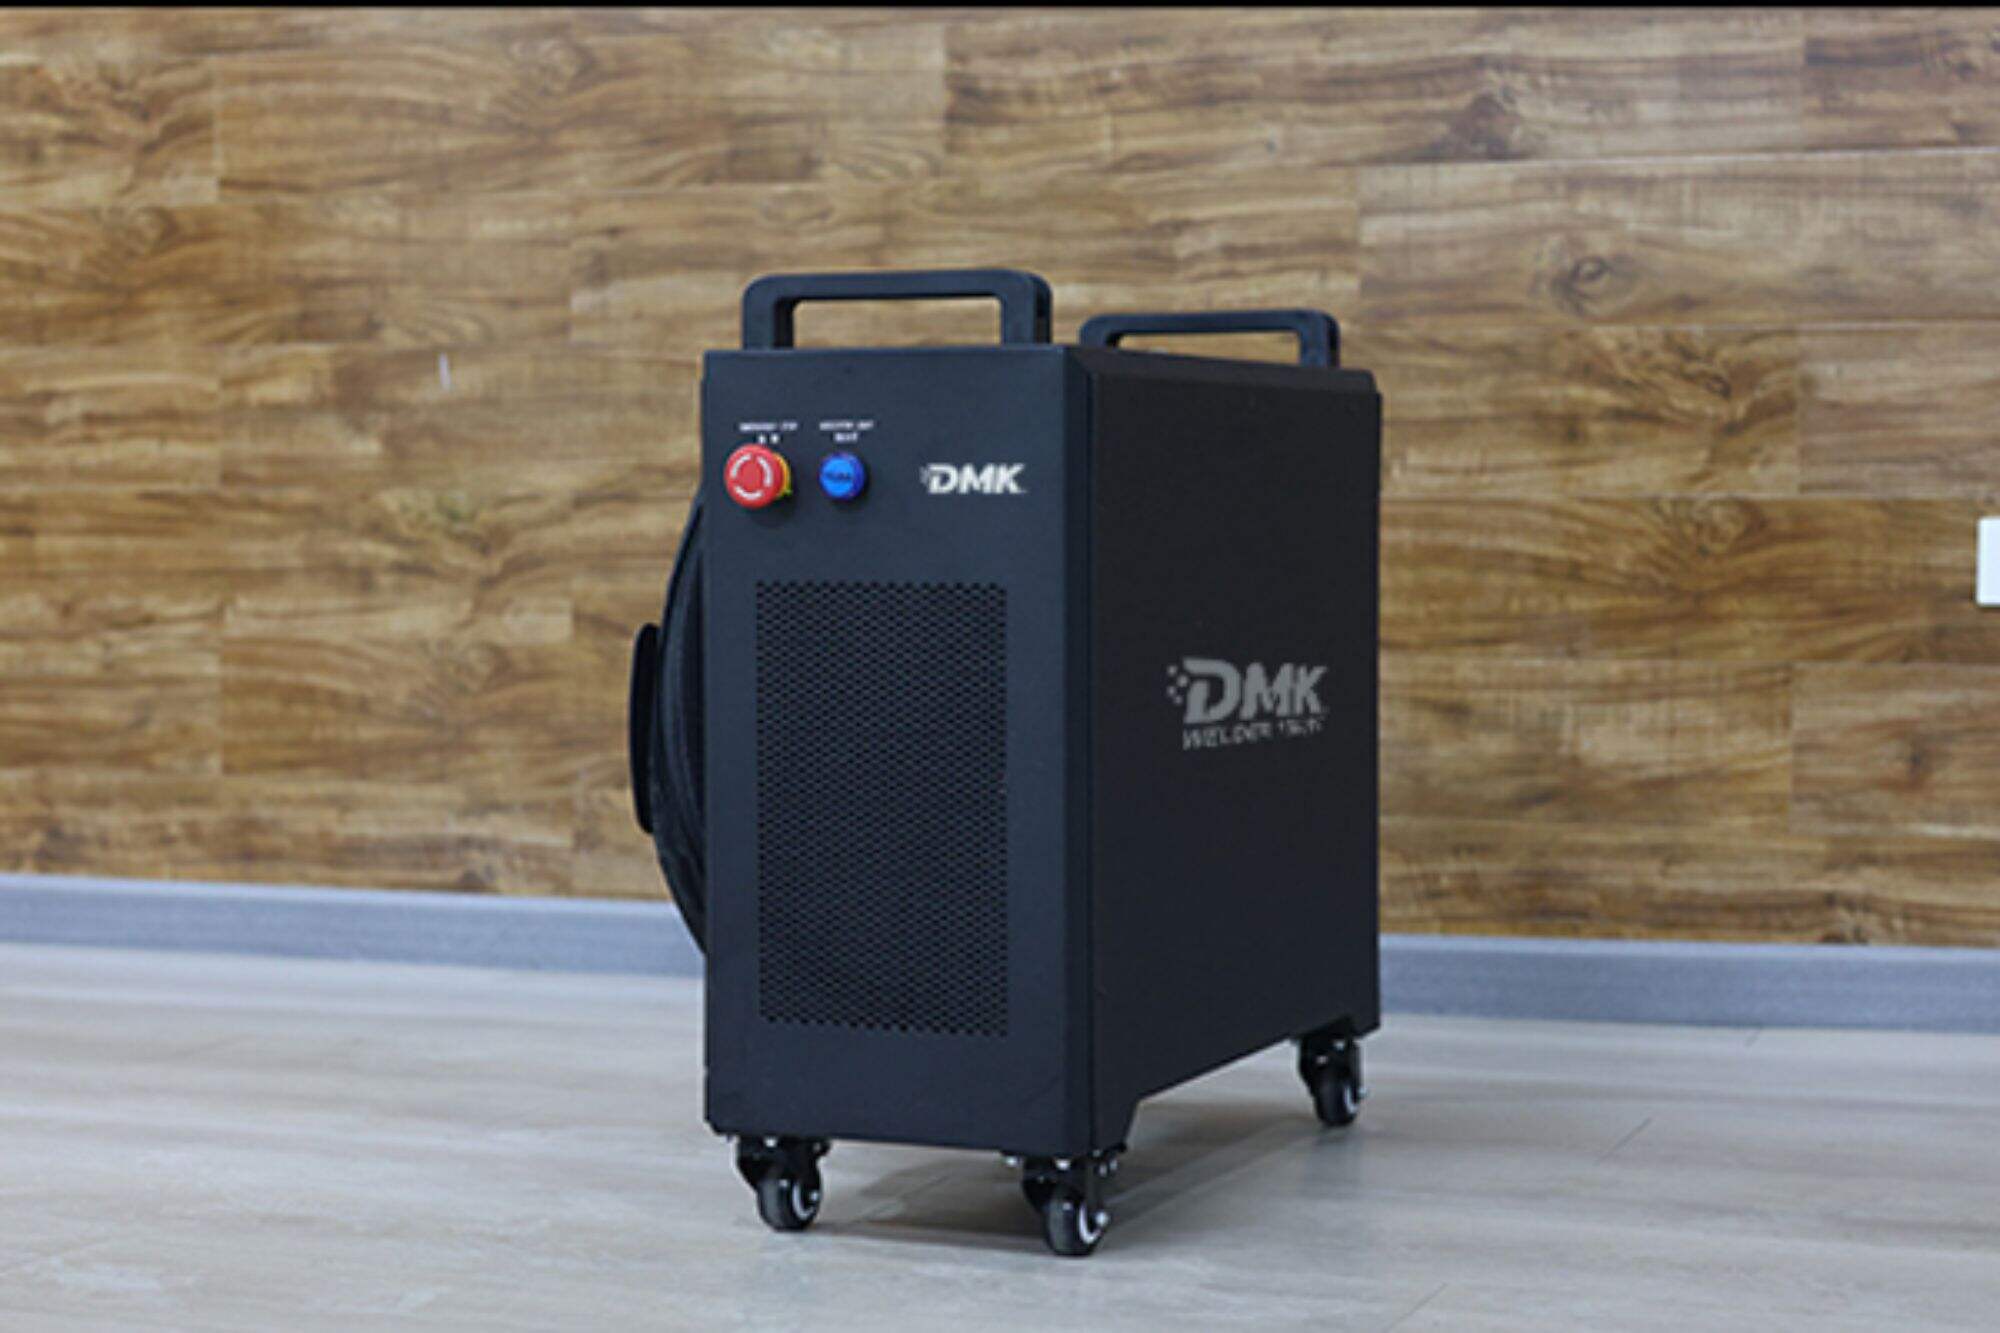 DMK mini air-cooled laser welding machine installation DMK mini air-cooled laser welding machine installation tutorial